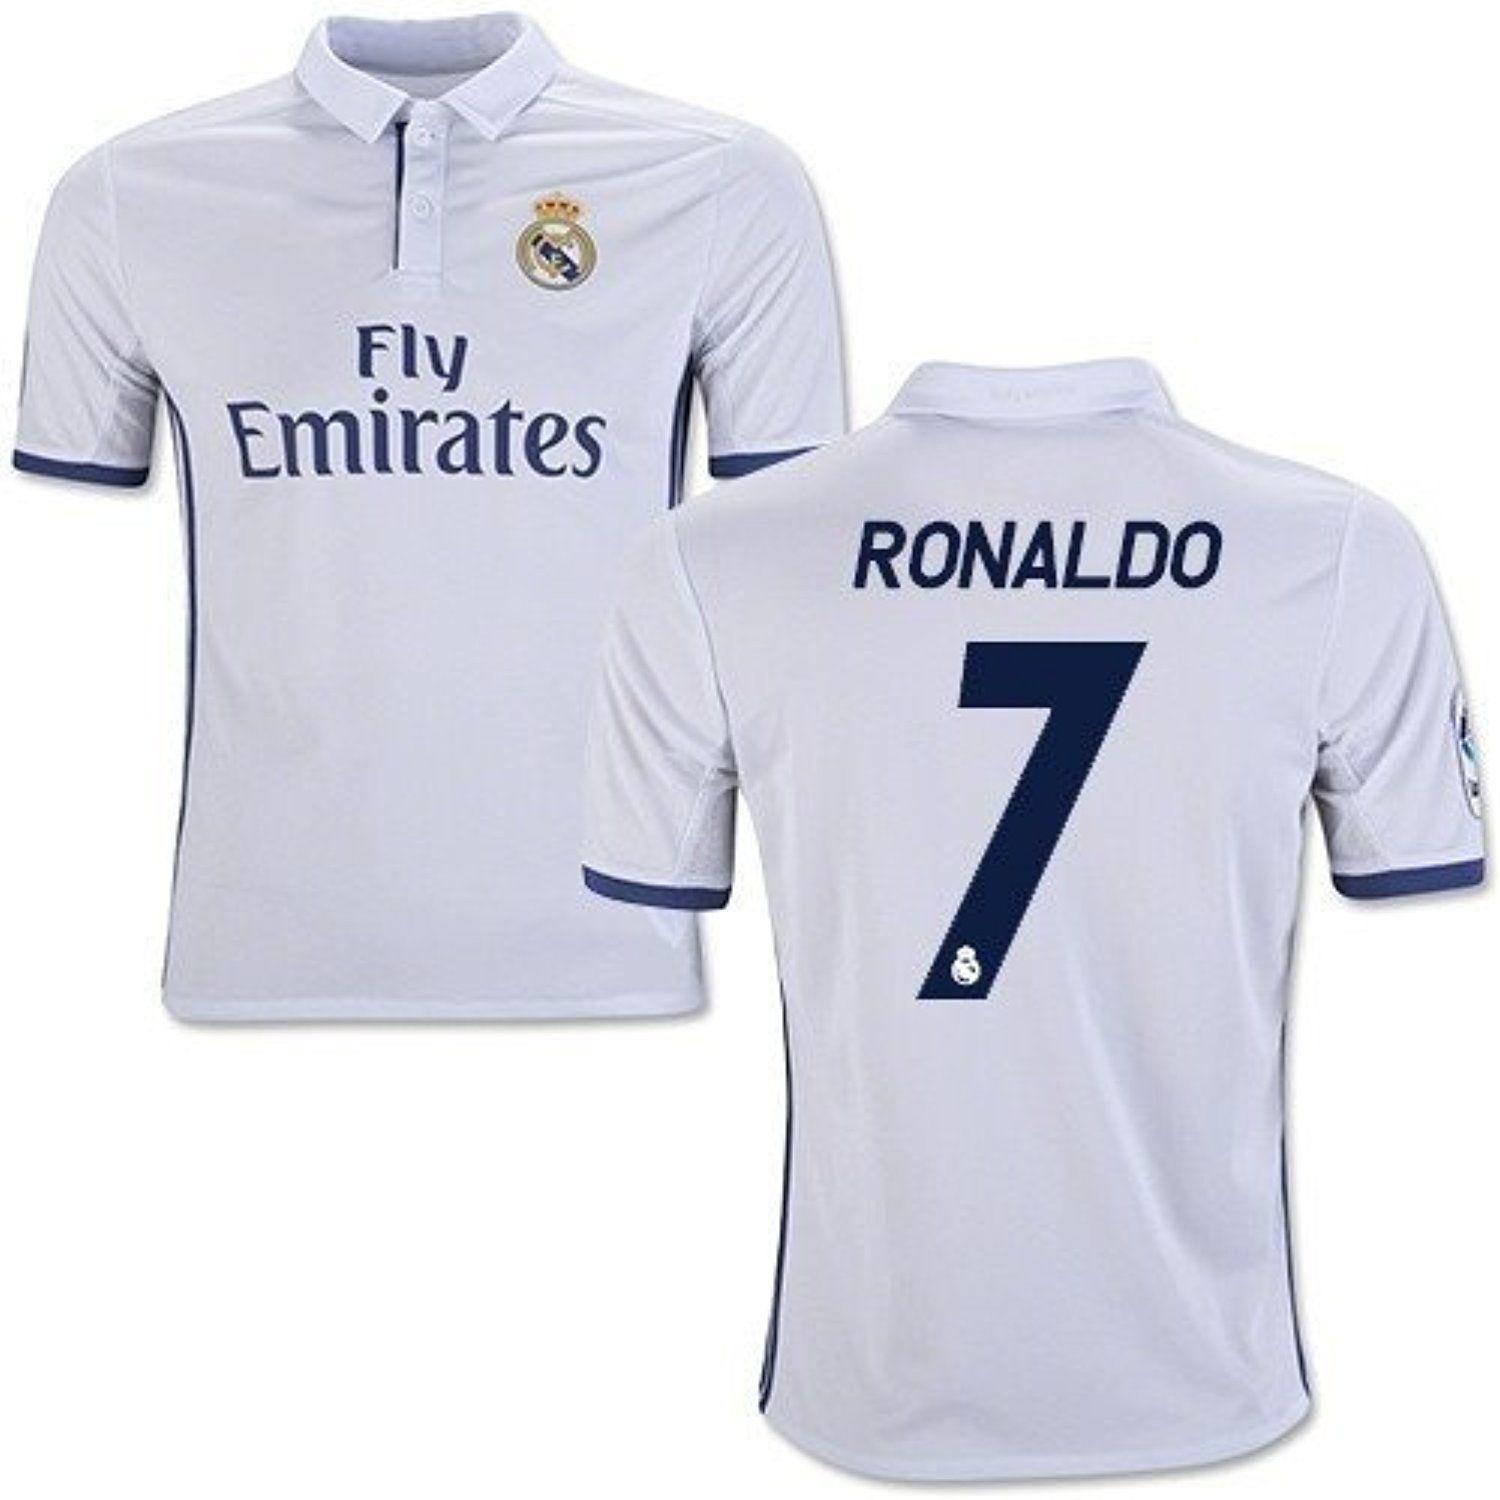 ronaldo football shirt